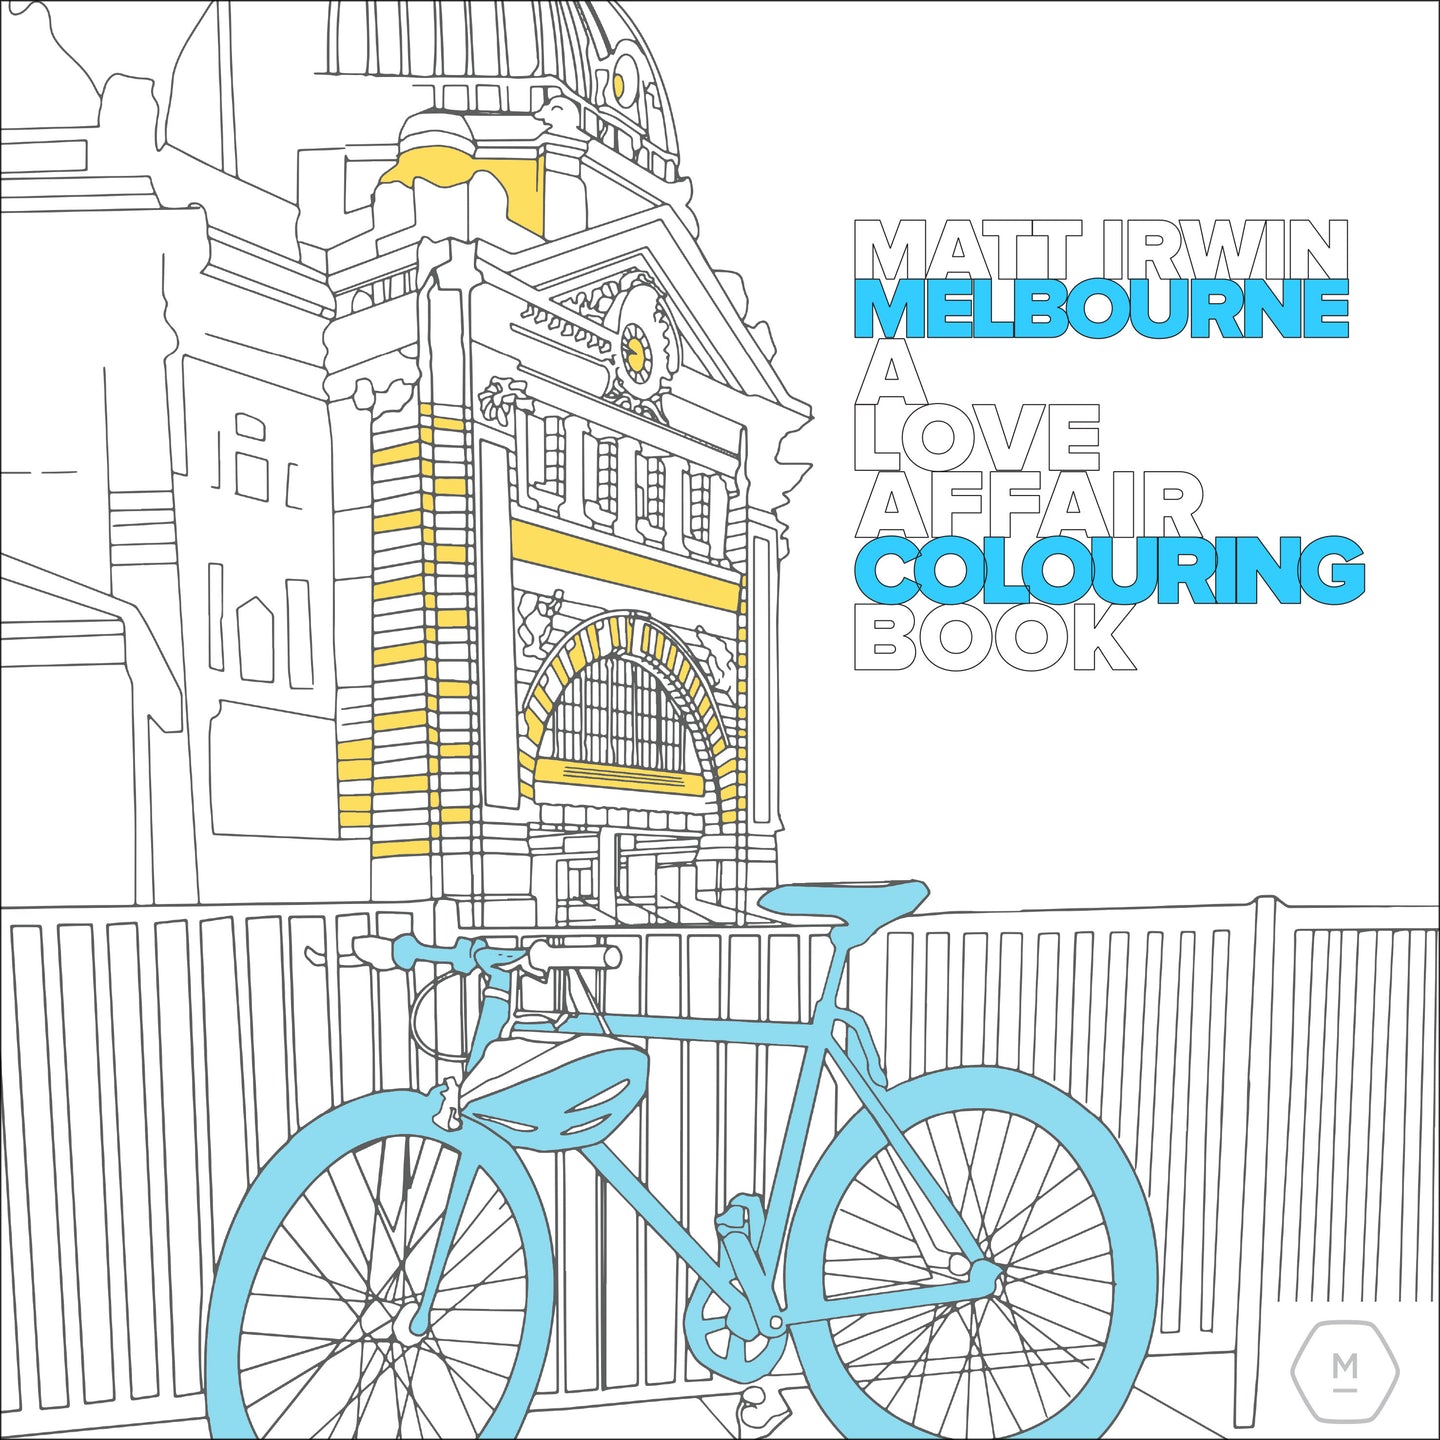 Matt Irwin Melbourne A Love Affair Colouring Book